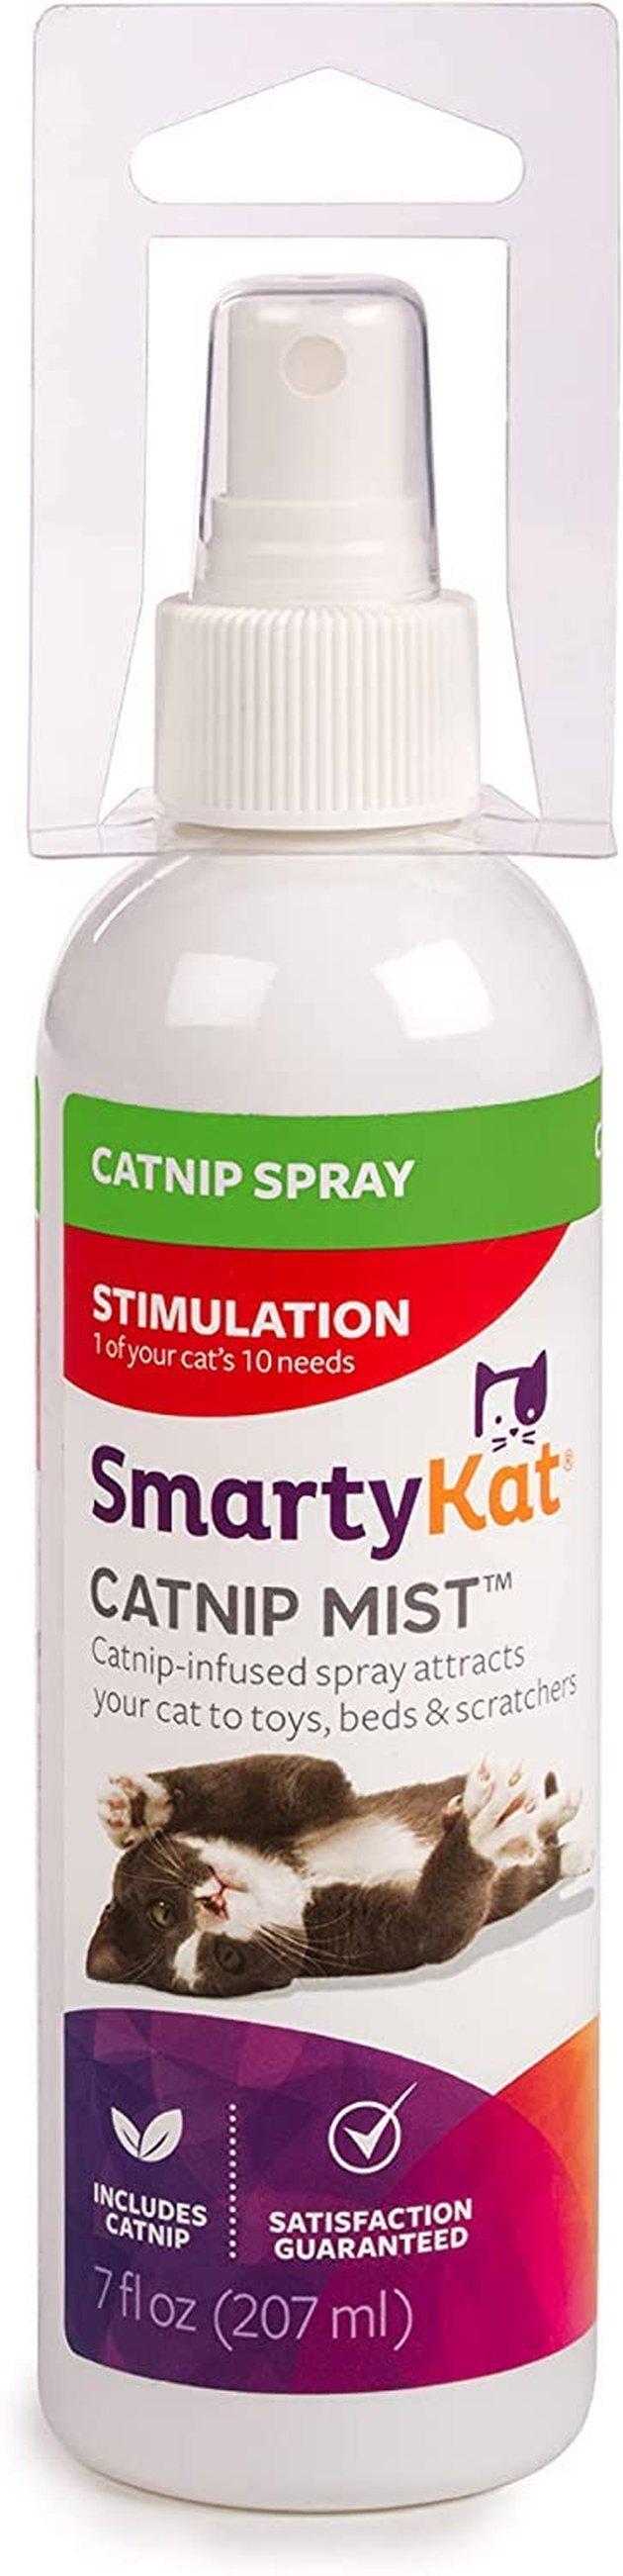 Meowijuana Catnip Catnip Spray 